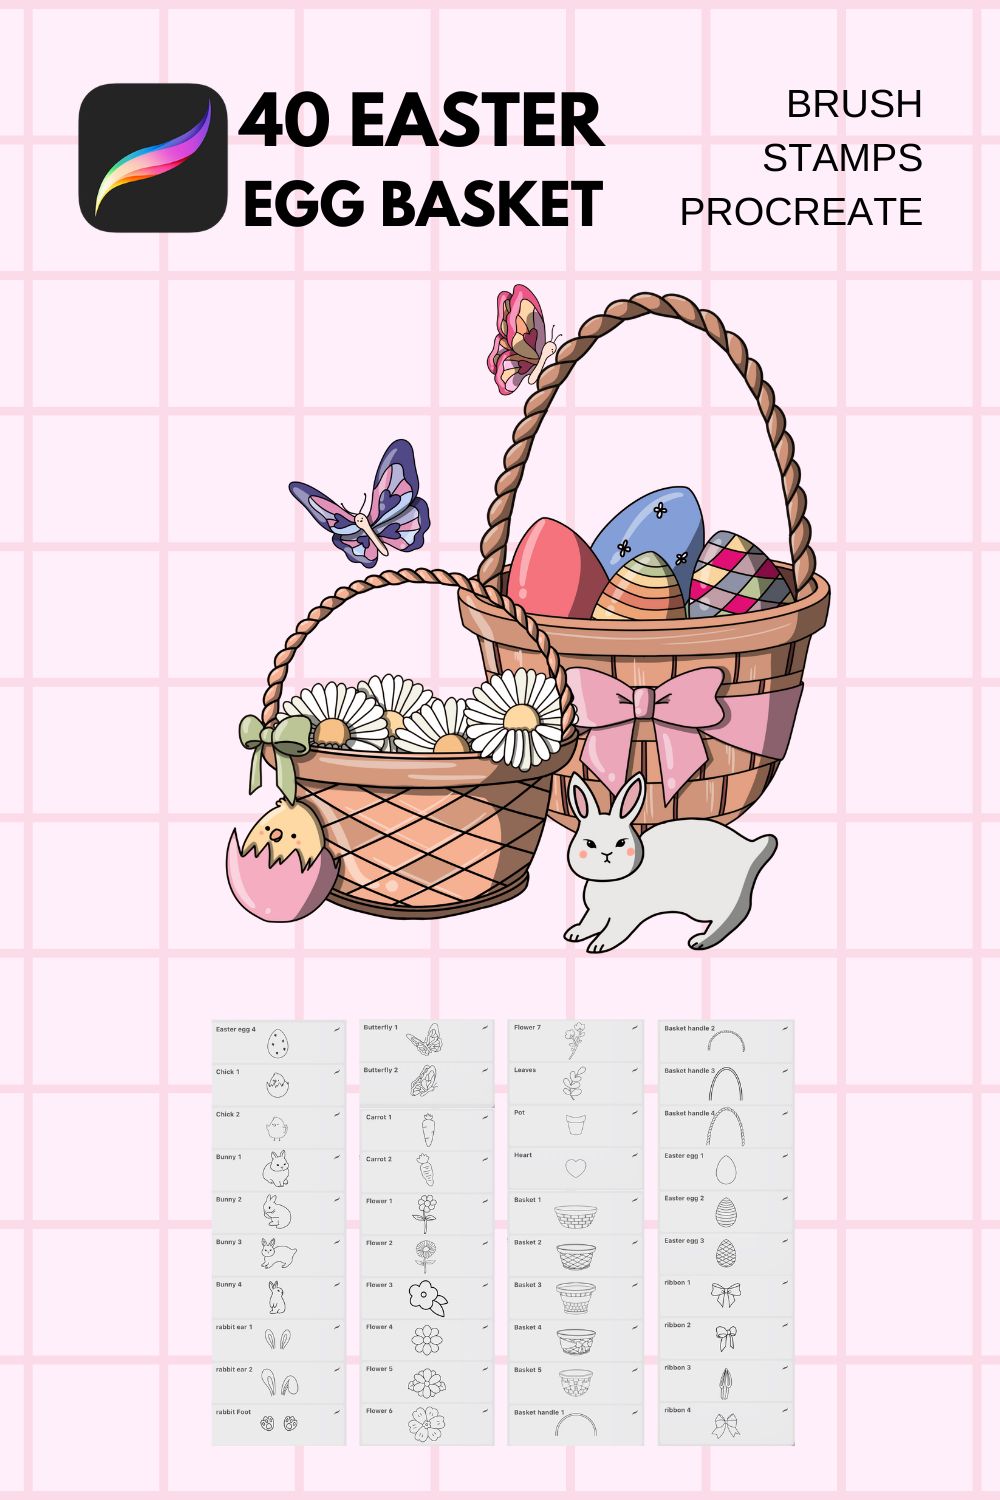 40 Easter Egg Basket - Brush Stamps procreate pinterest preview image.